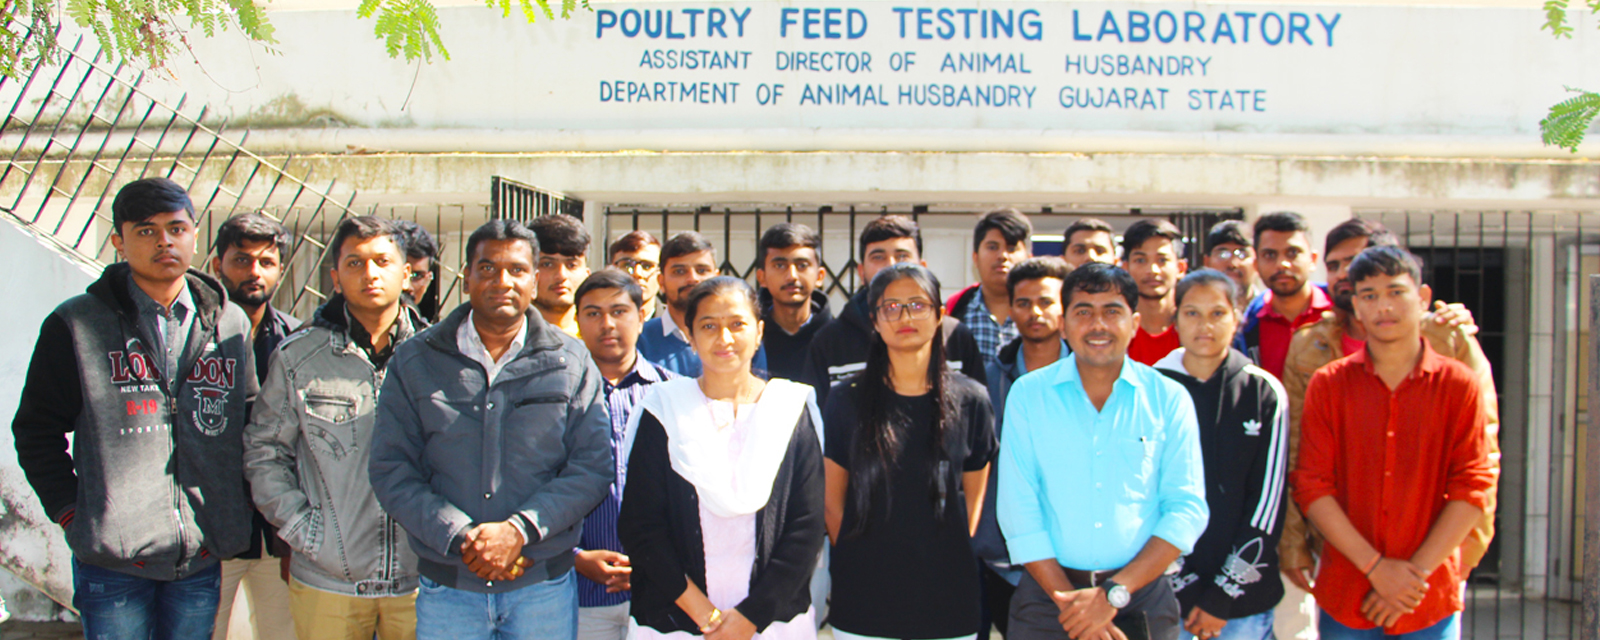 College of Veterinary Science and Animal Husbandry, Junagadh, Gujarat.